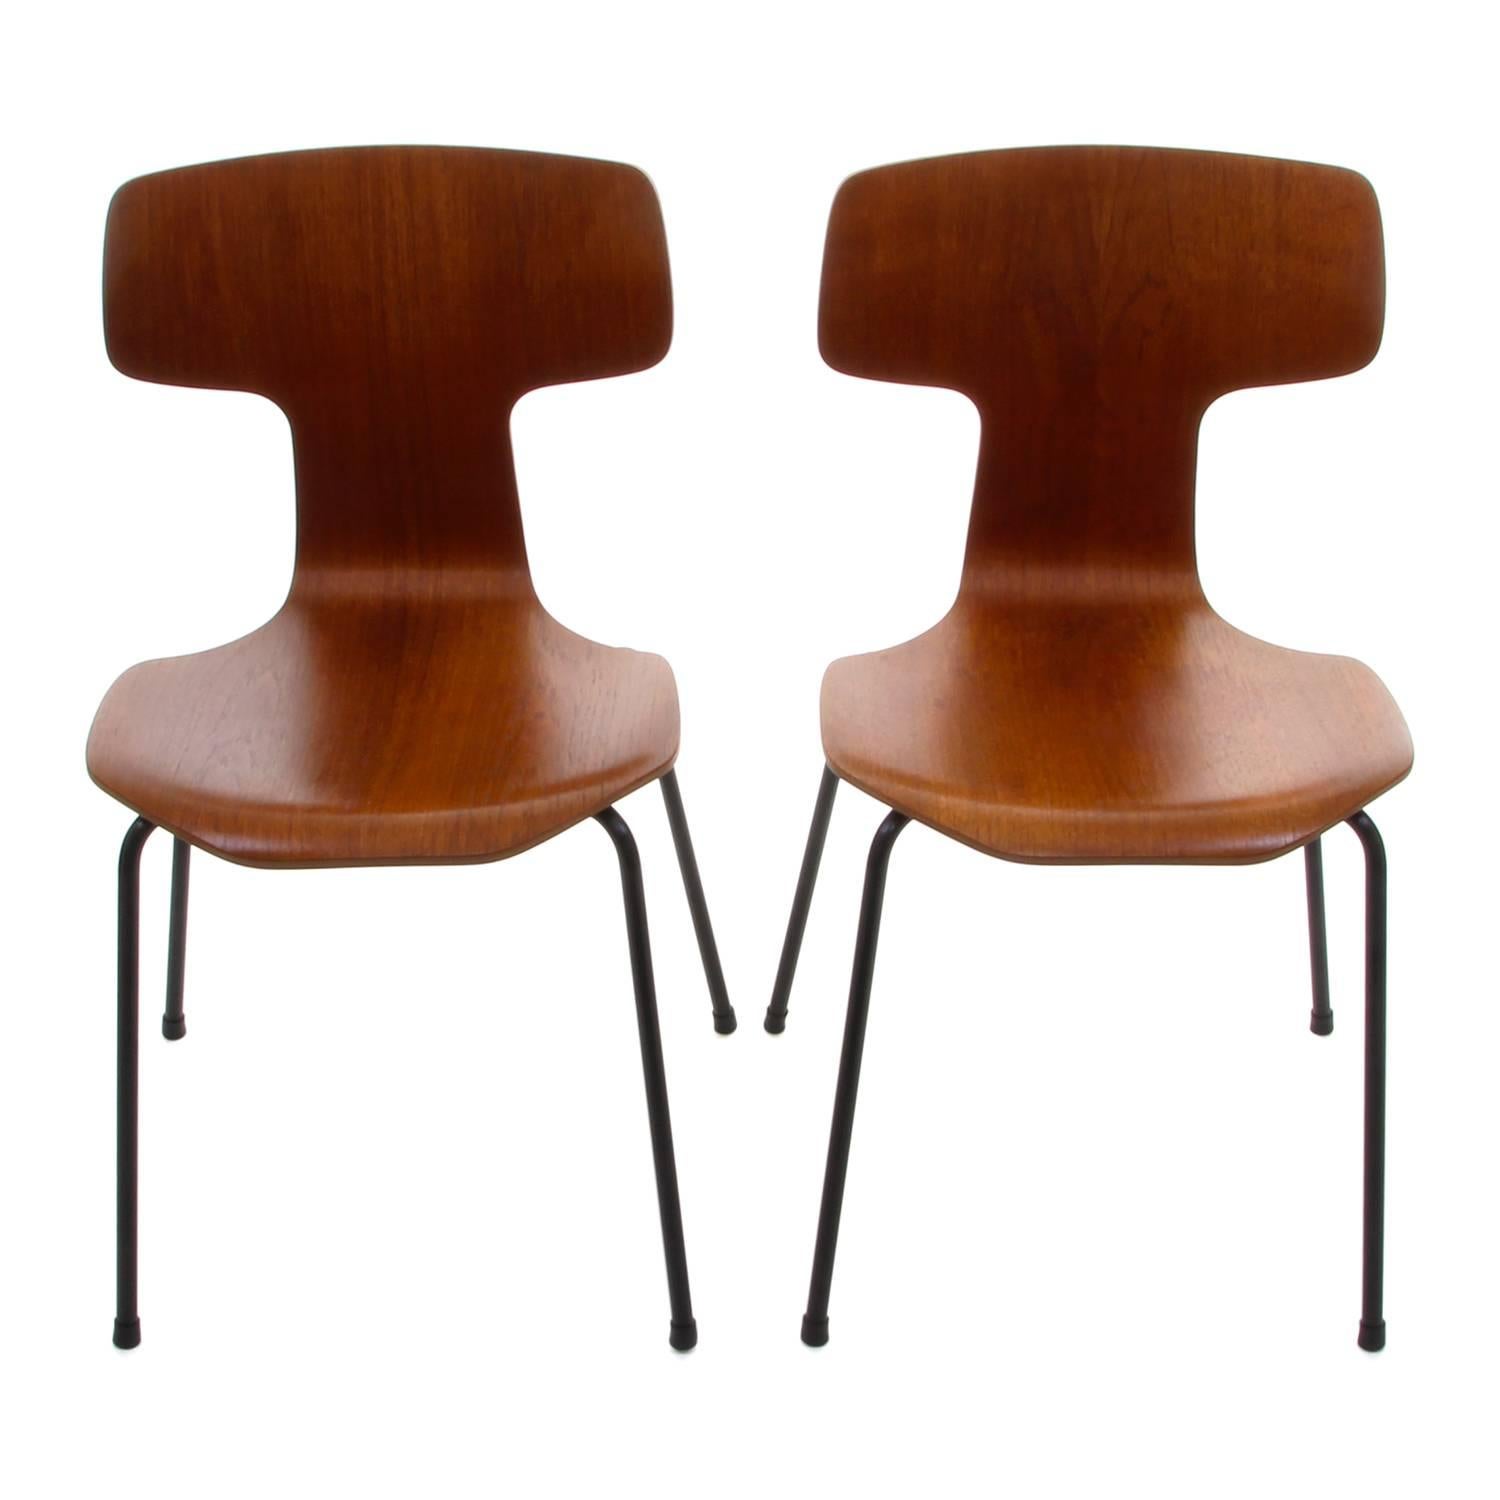 Scandinavian Modern Two Teak T-Chairs, Model 3103 Dining Chairs by Arne Jacobsen, Fritz Hansen, 1955 For Sale